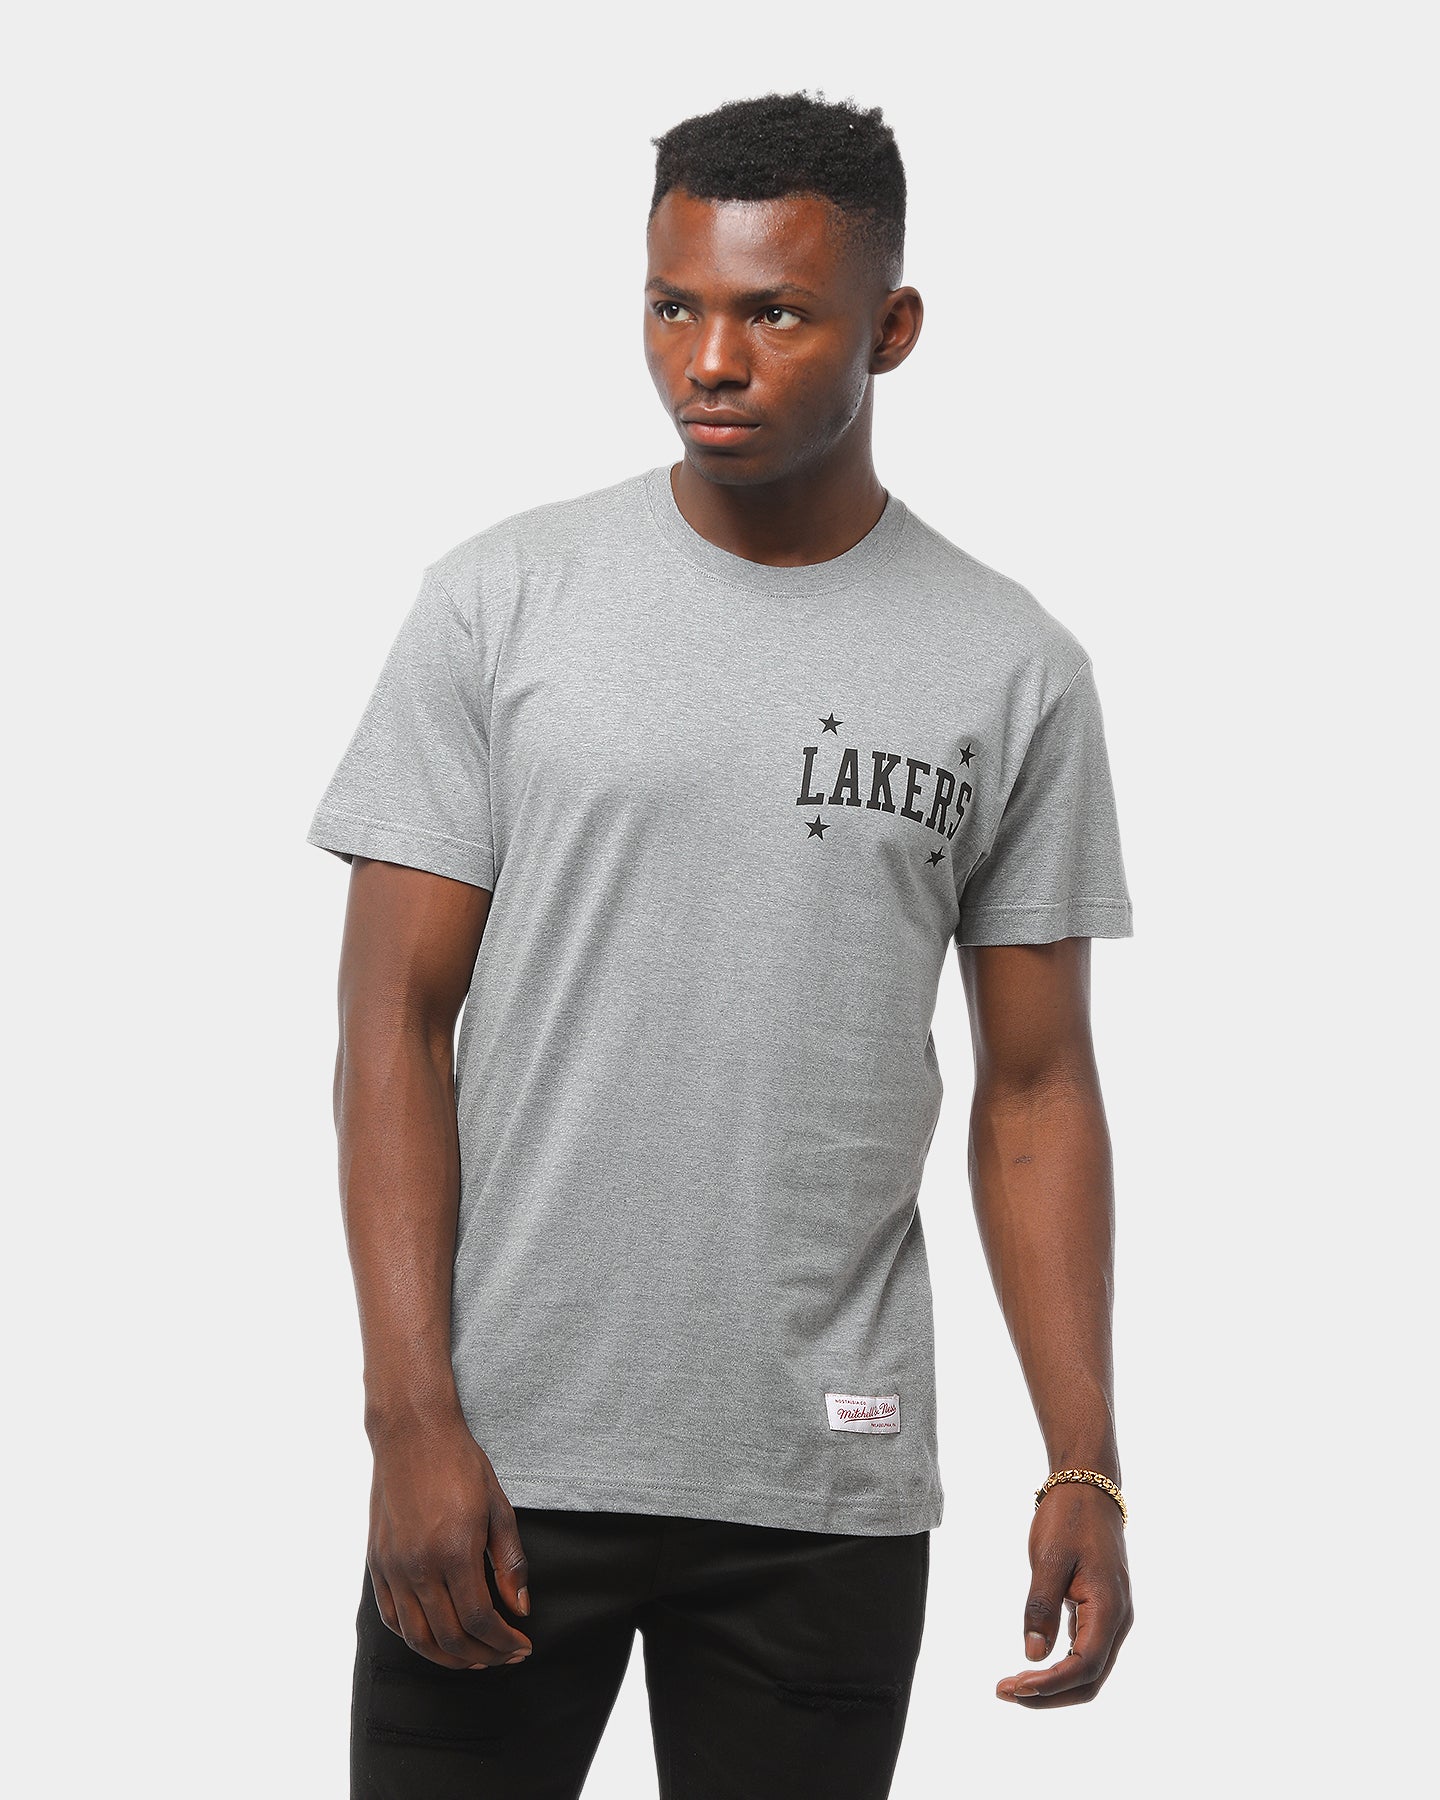 lakers grey t shirt